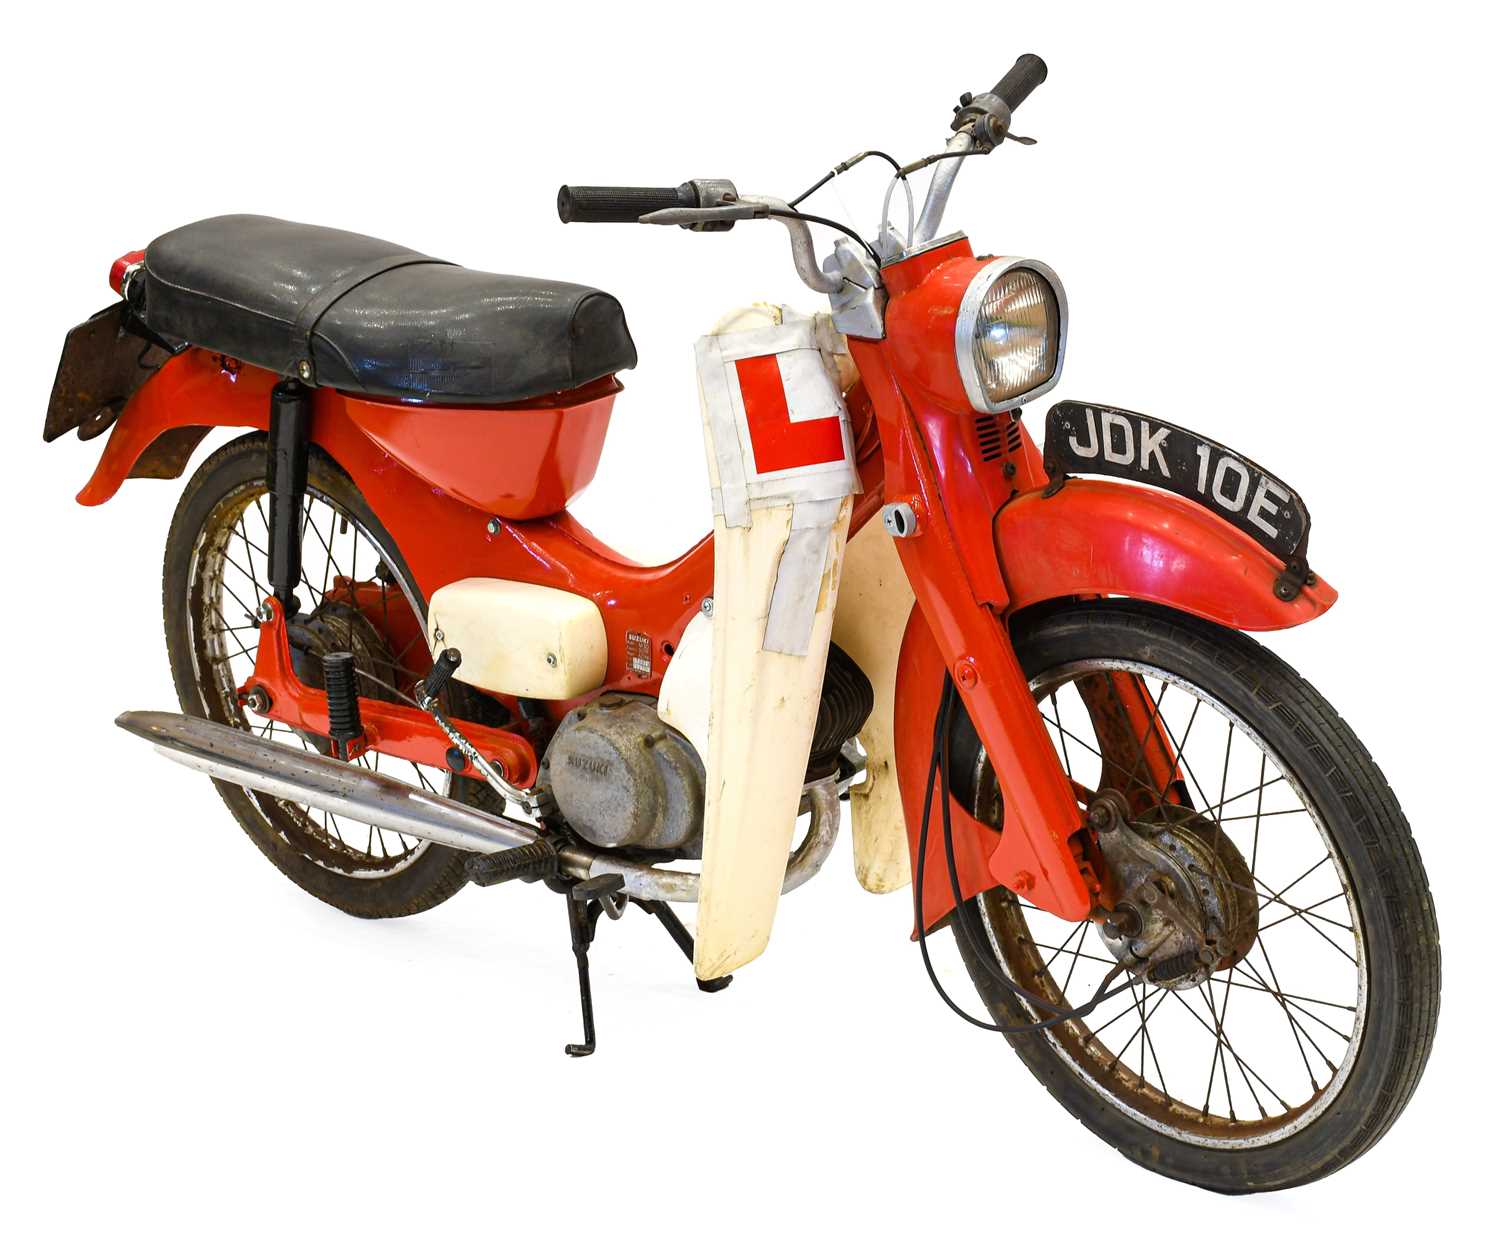 Suzuki Suzy C30 50ccRegistration number: JDK 10EDate of first registration: 1967Frame number: